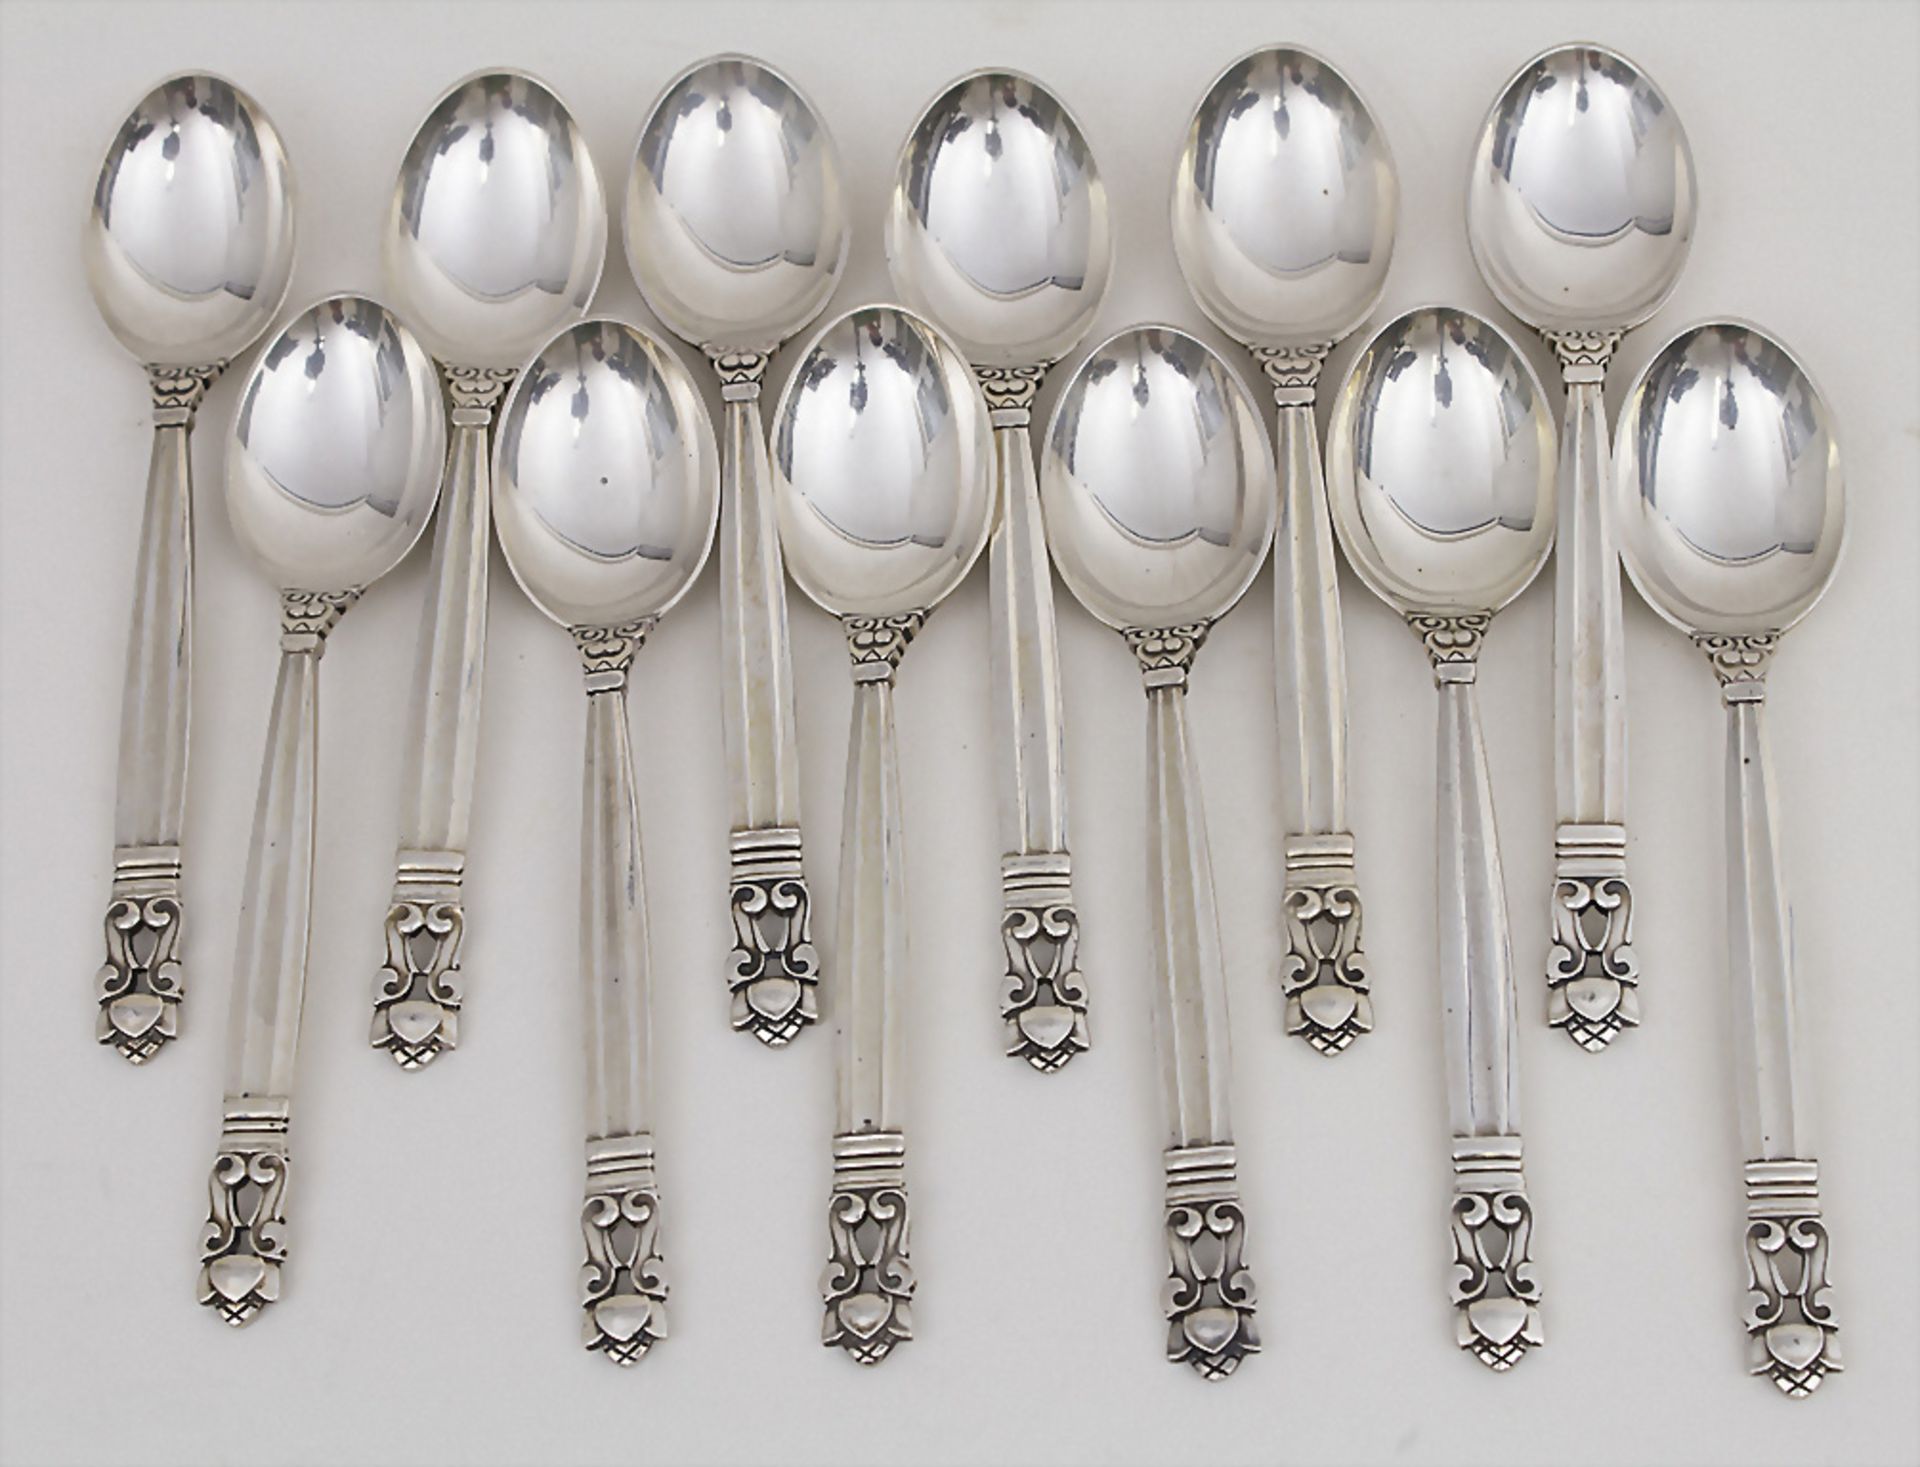 12 Mokkalöffel 'Acorn' / 12 mocha spoons 'Acorn', Georg Jensen, Kopenhagen, nach 1945